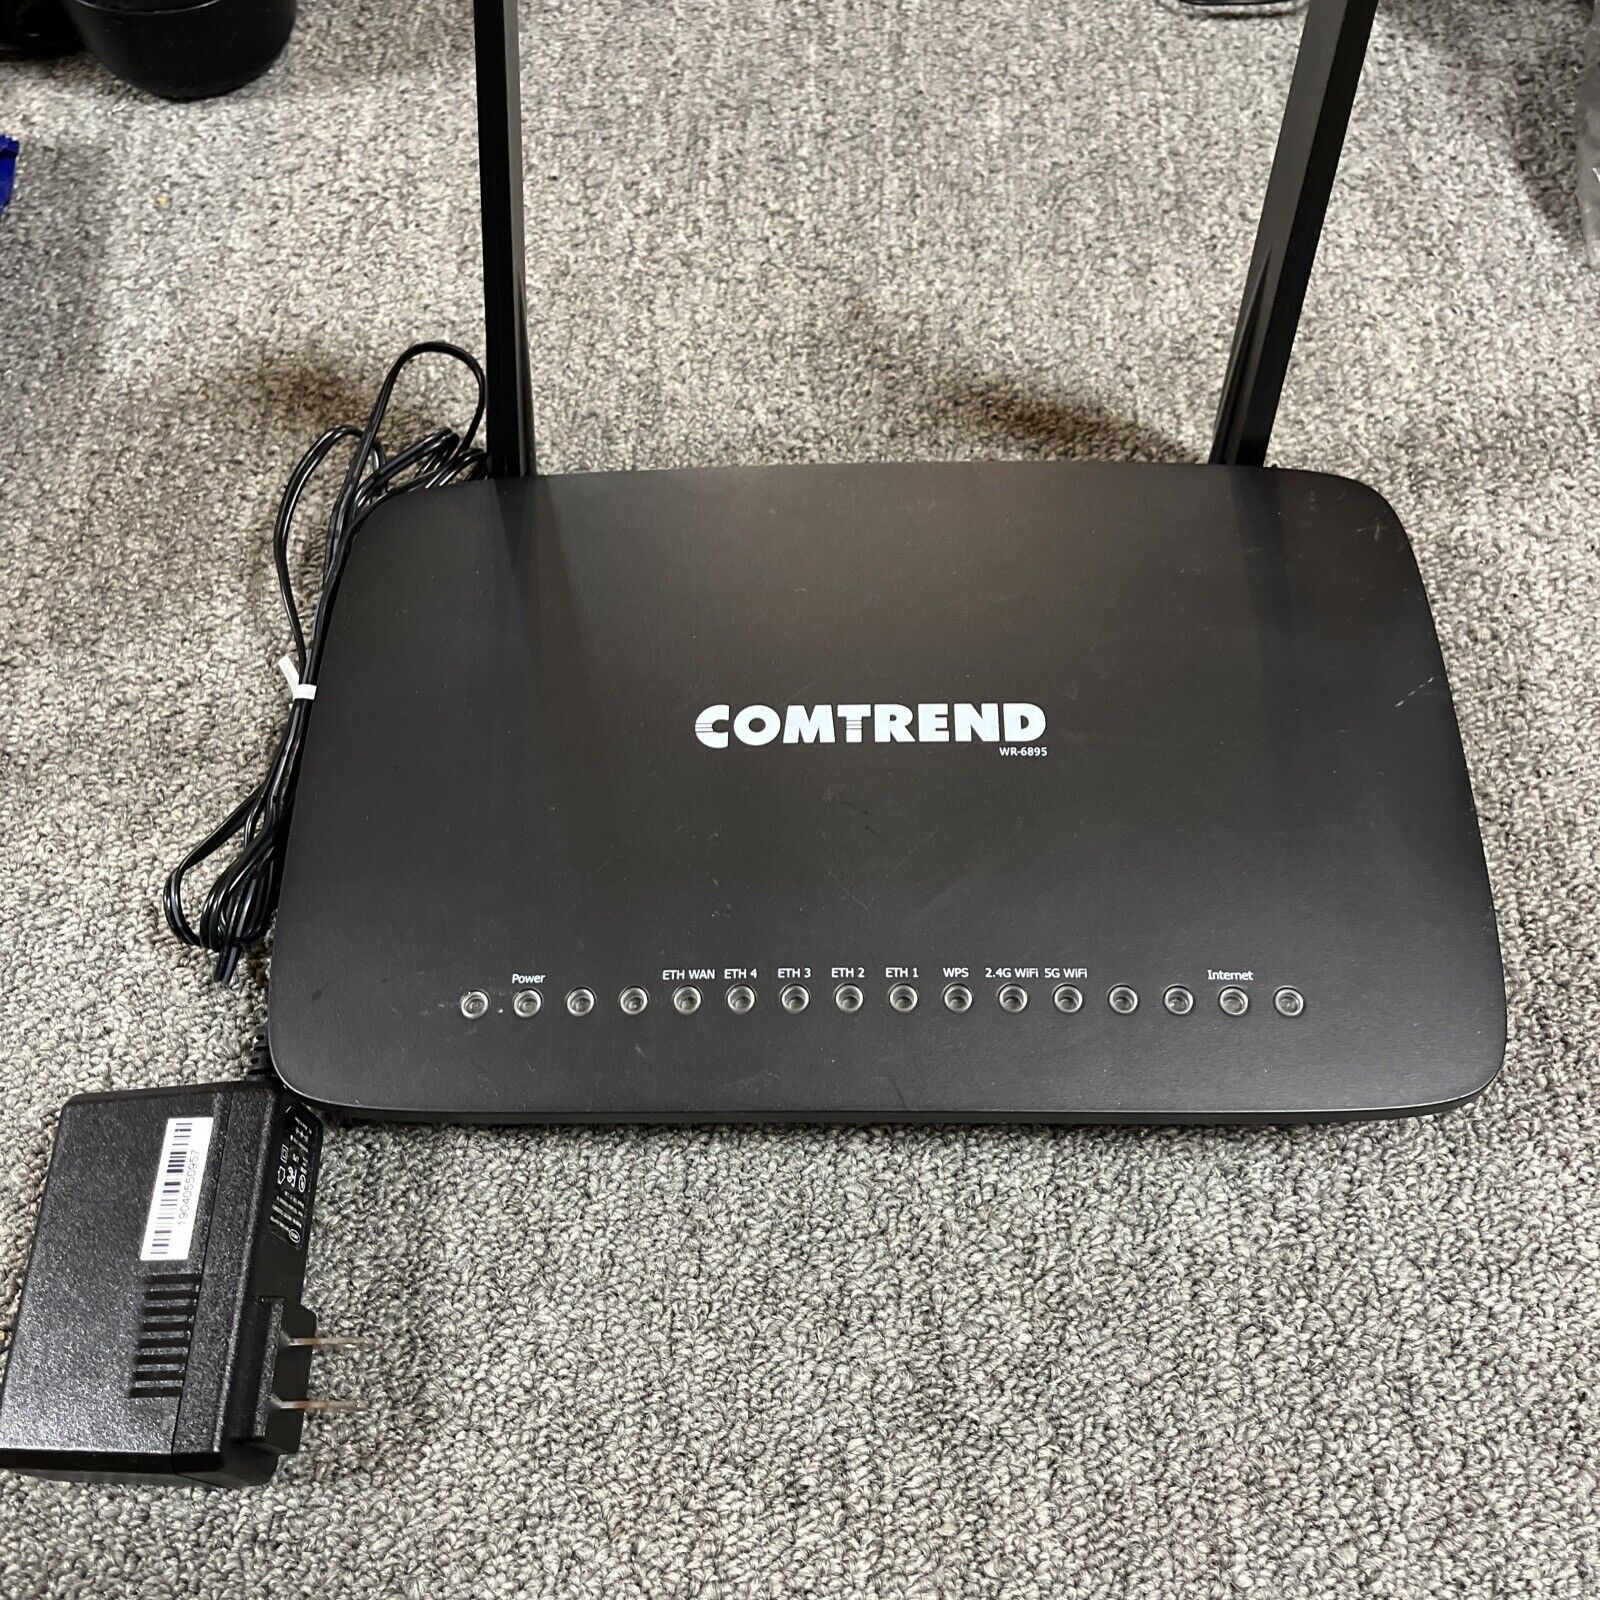 Comtrend Wireless Router WR-6895 5-Port Gigabit Ethernet High Power Tested